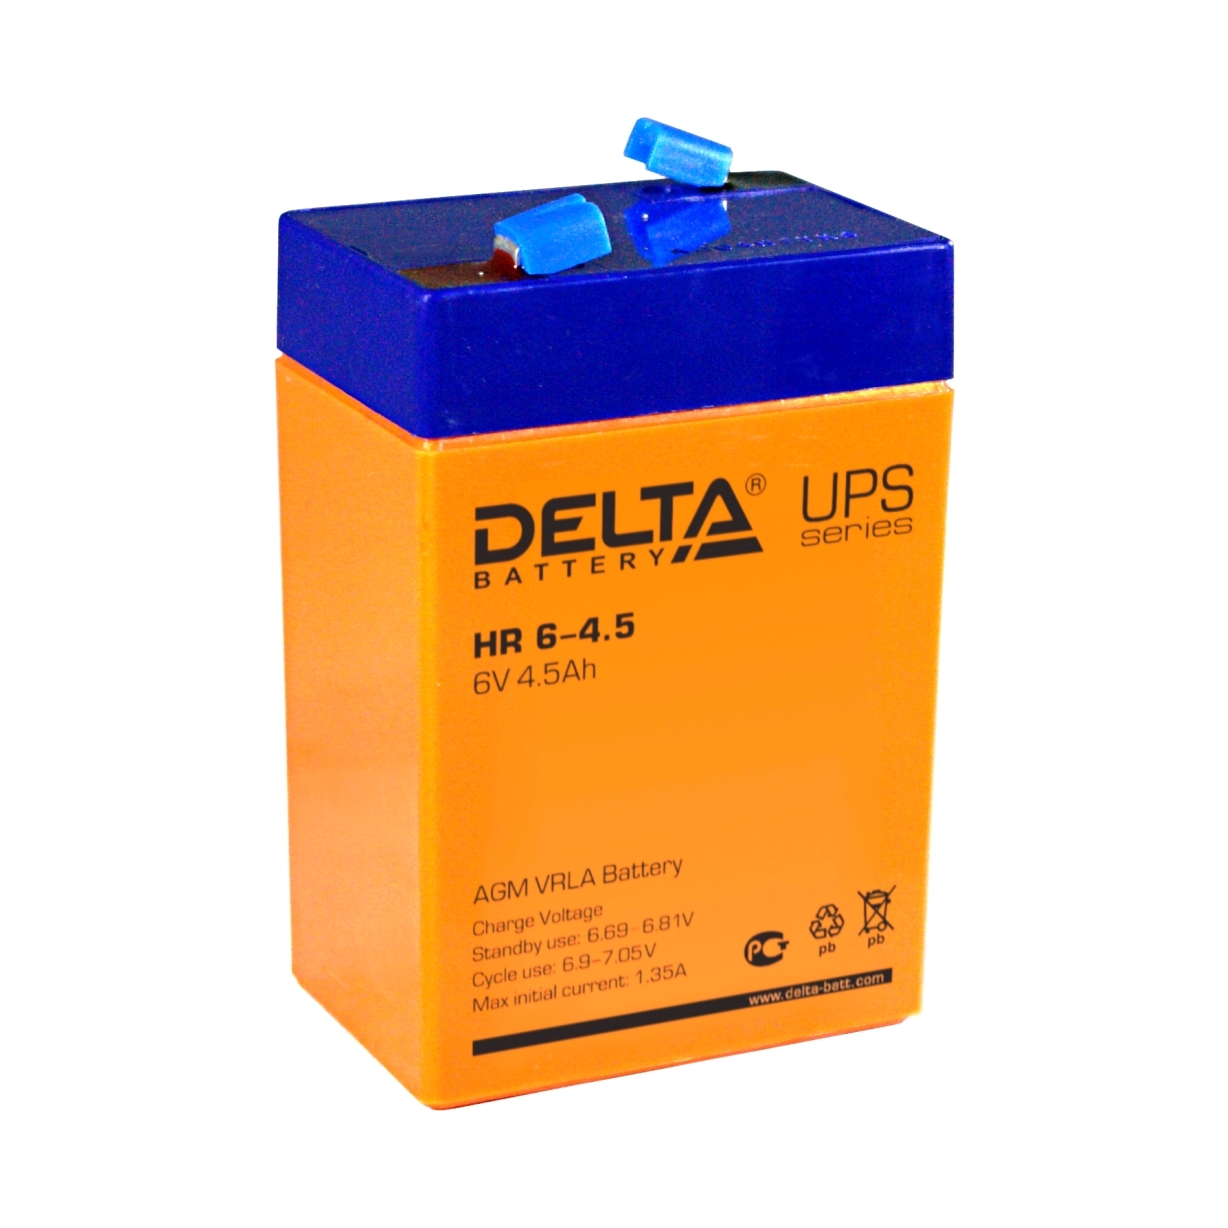 Battery 5. Аккумулятор 6v 4.5Ah Delta DTM. Аккумуляторная батарея Delta HR 6-7.2 (6v / 7.2Ah). Аккумуляторная батарея Delta HR 6-4.5 (6v / 4.5Ah). Delta DTM-6045 6v 4.5Ah.